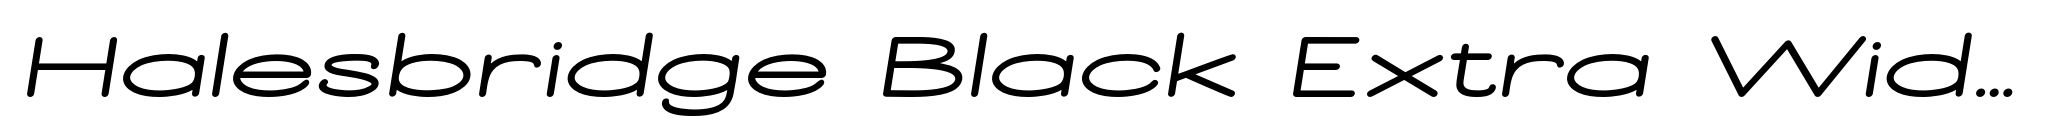 Halesbridge Black Extra Wide Italic image